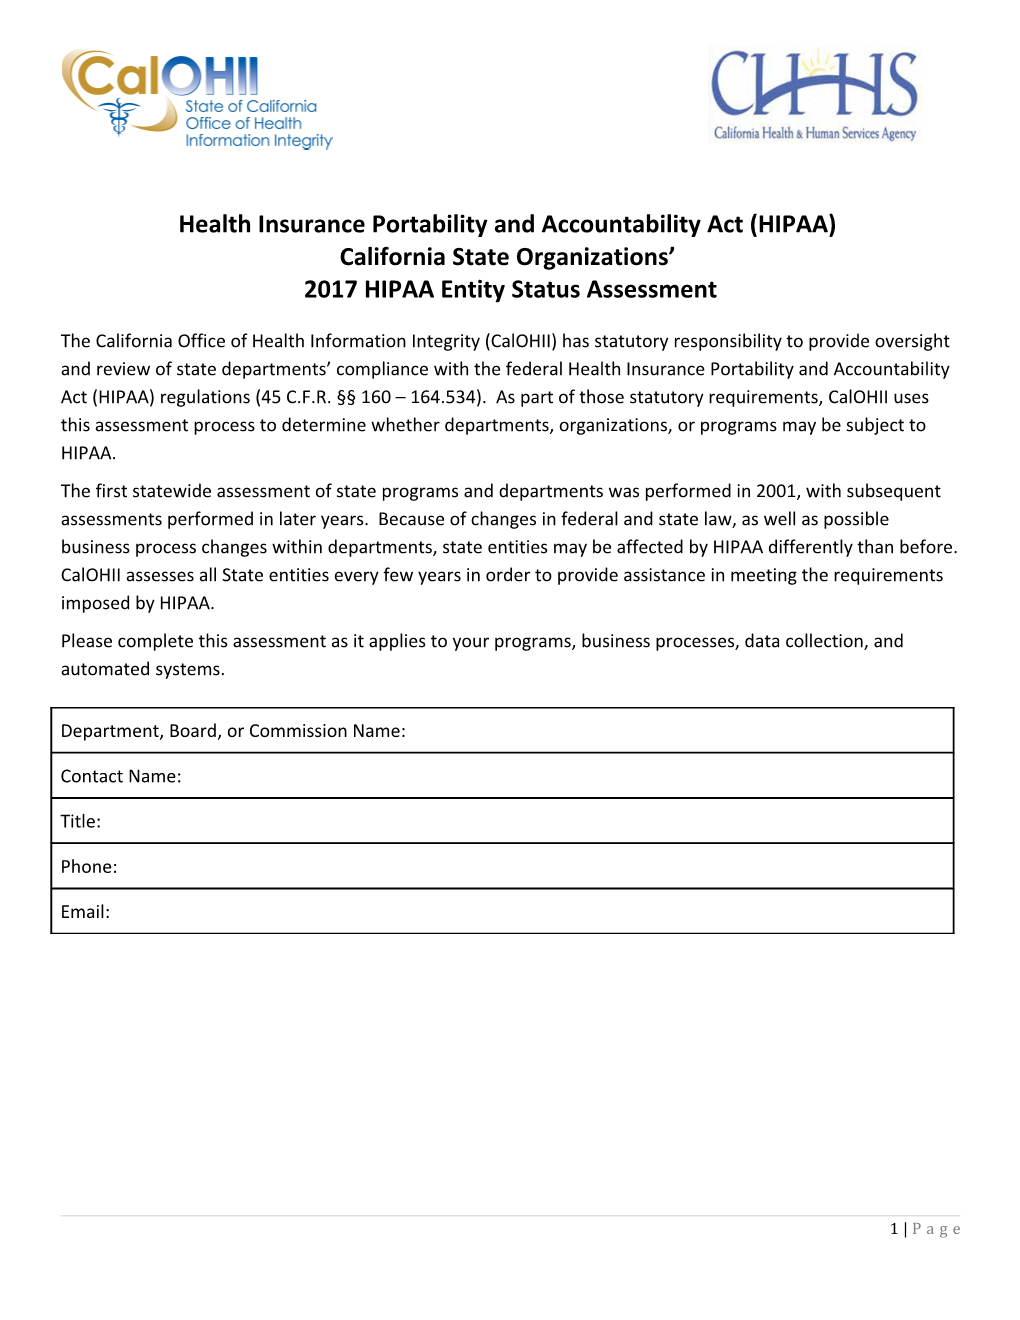 2017 HIPAA Entity Status Assessment